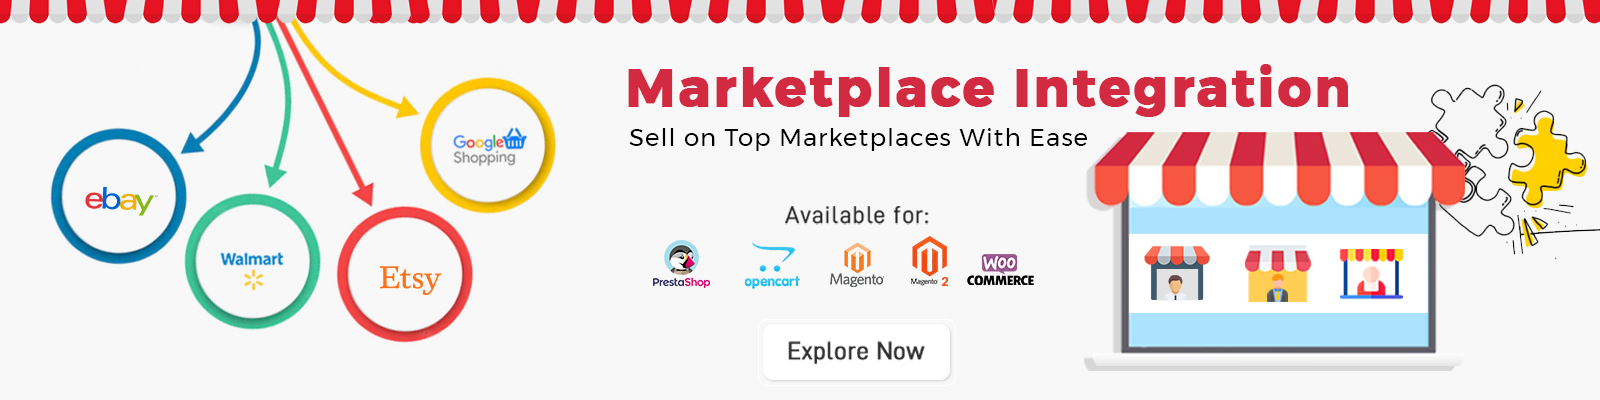 Marketplace Banner